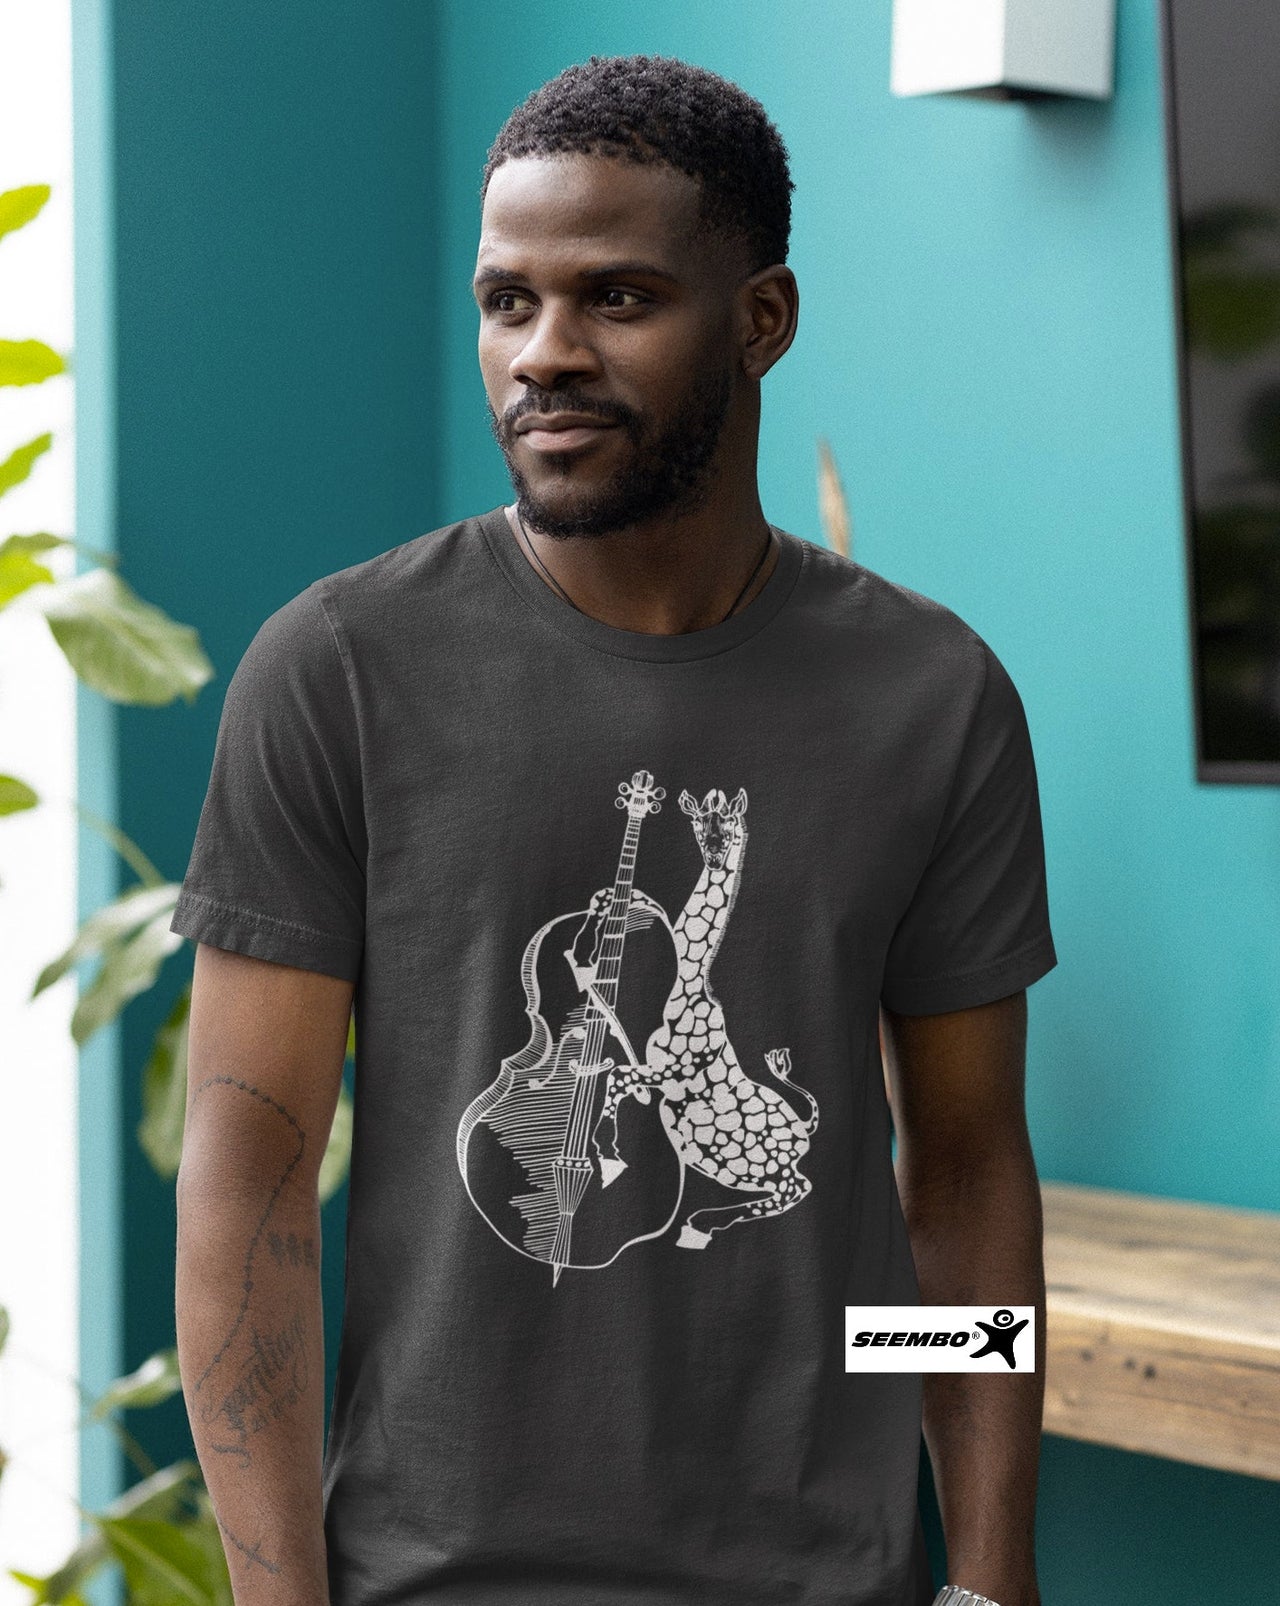 a-man-wearing-asphalt-t-shirt-with-giraffe-playing-cello-design